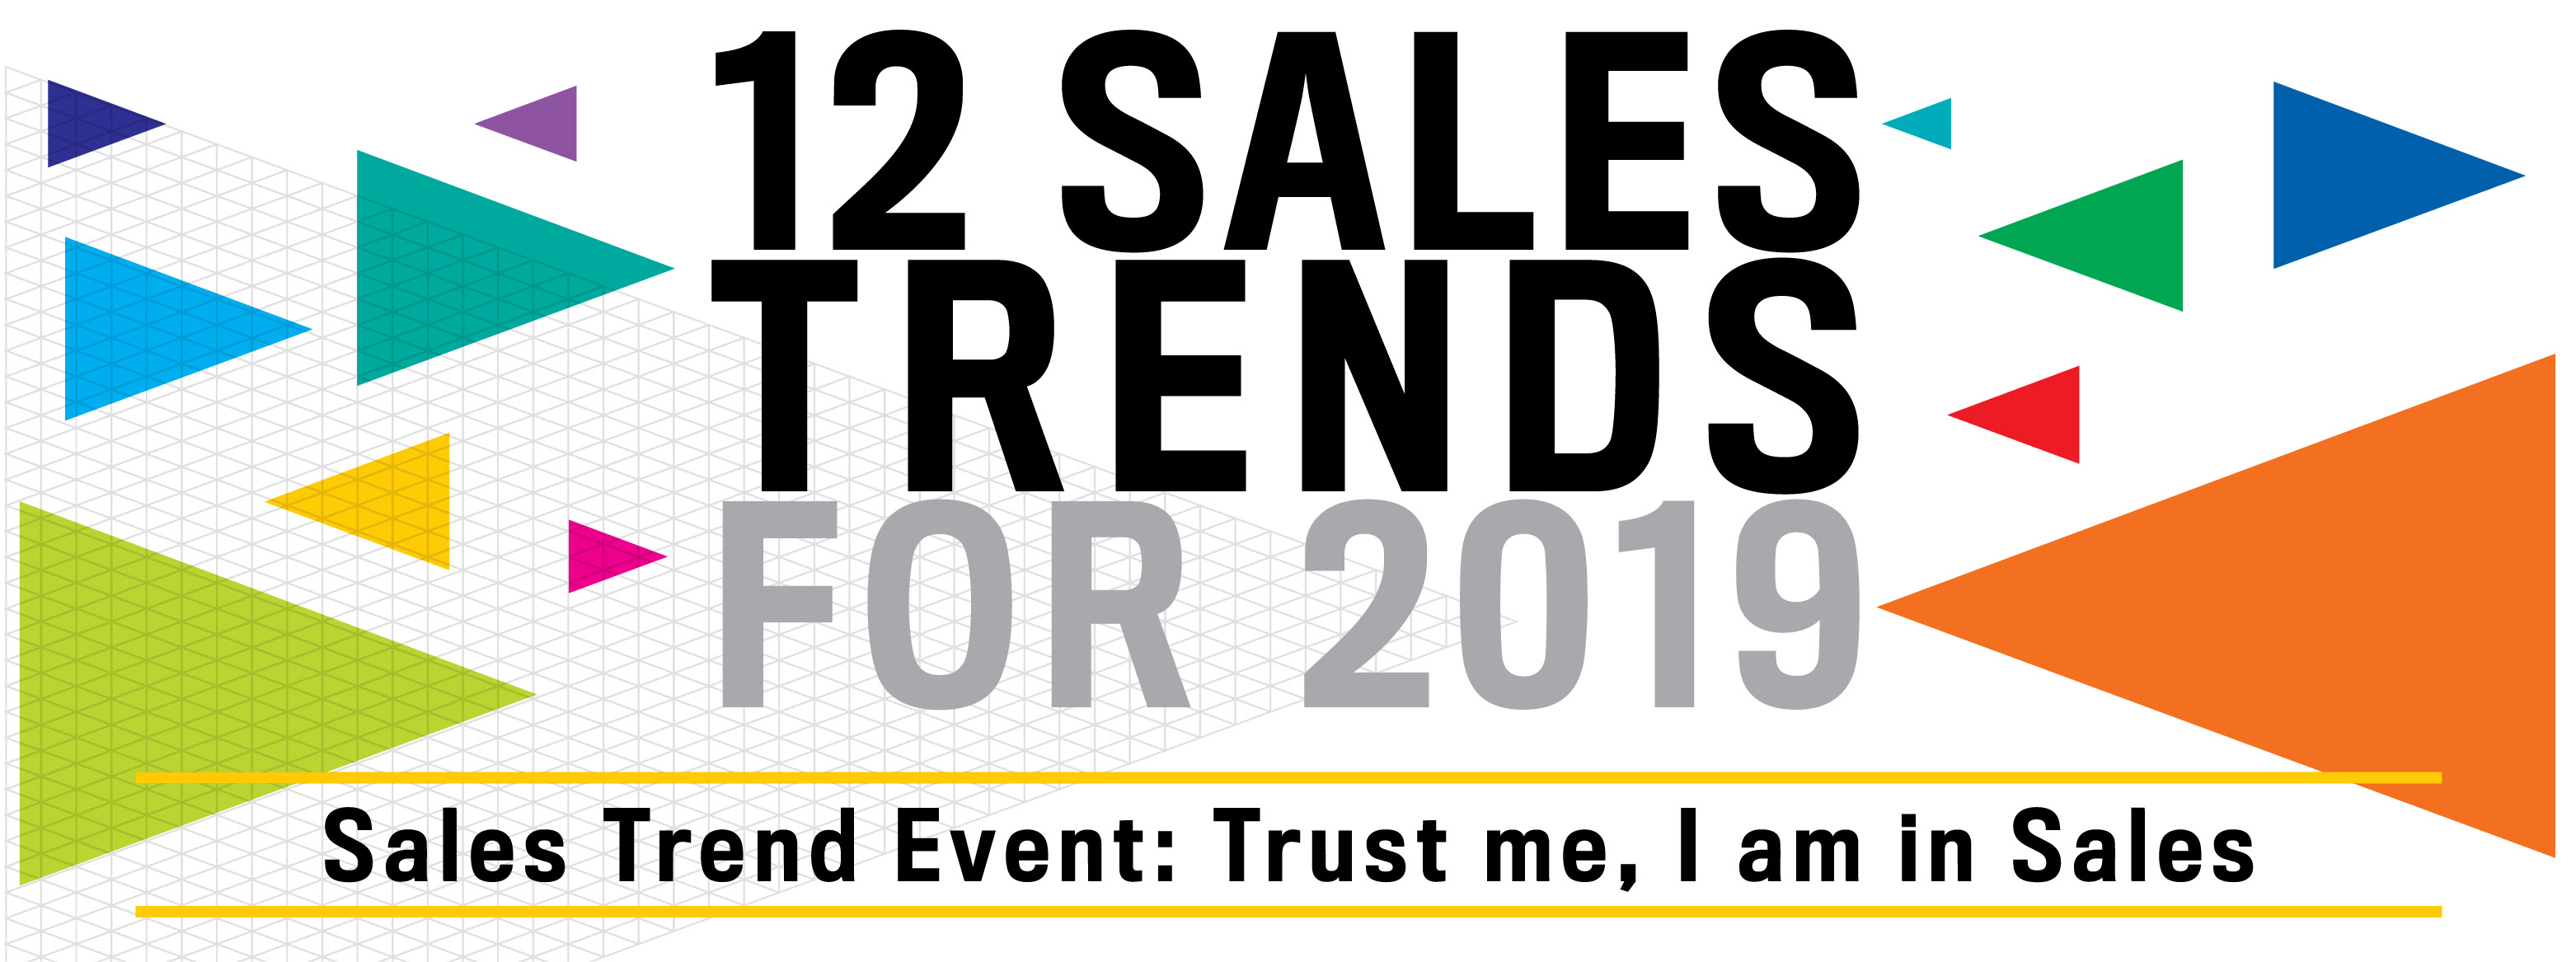 barrett_sales_trends_2019_Trend_Event_Trust_me_I_am_in_Sales.